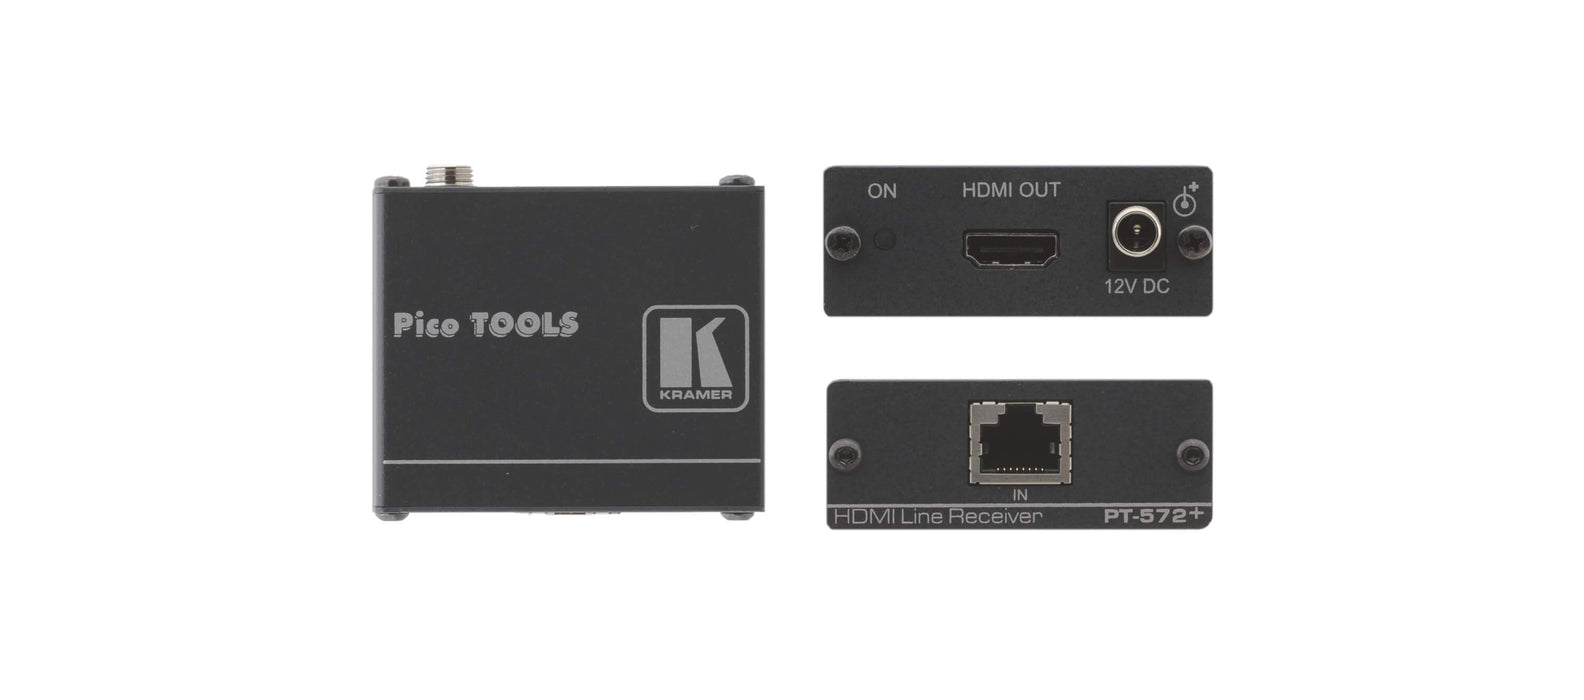 PT-571/ PT-572 + Transmisor / Receptor compacto HDMI